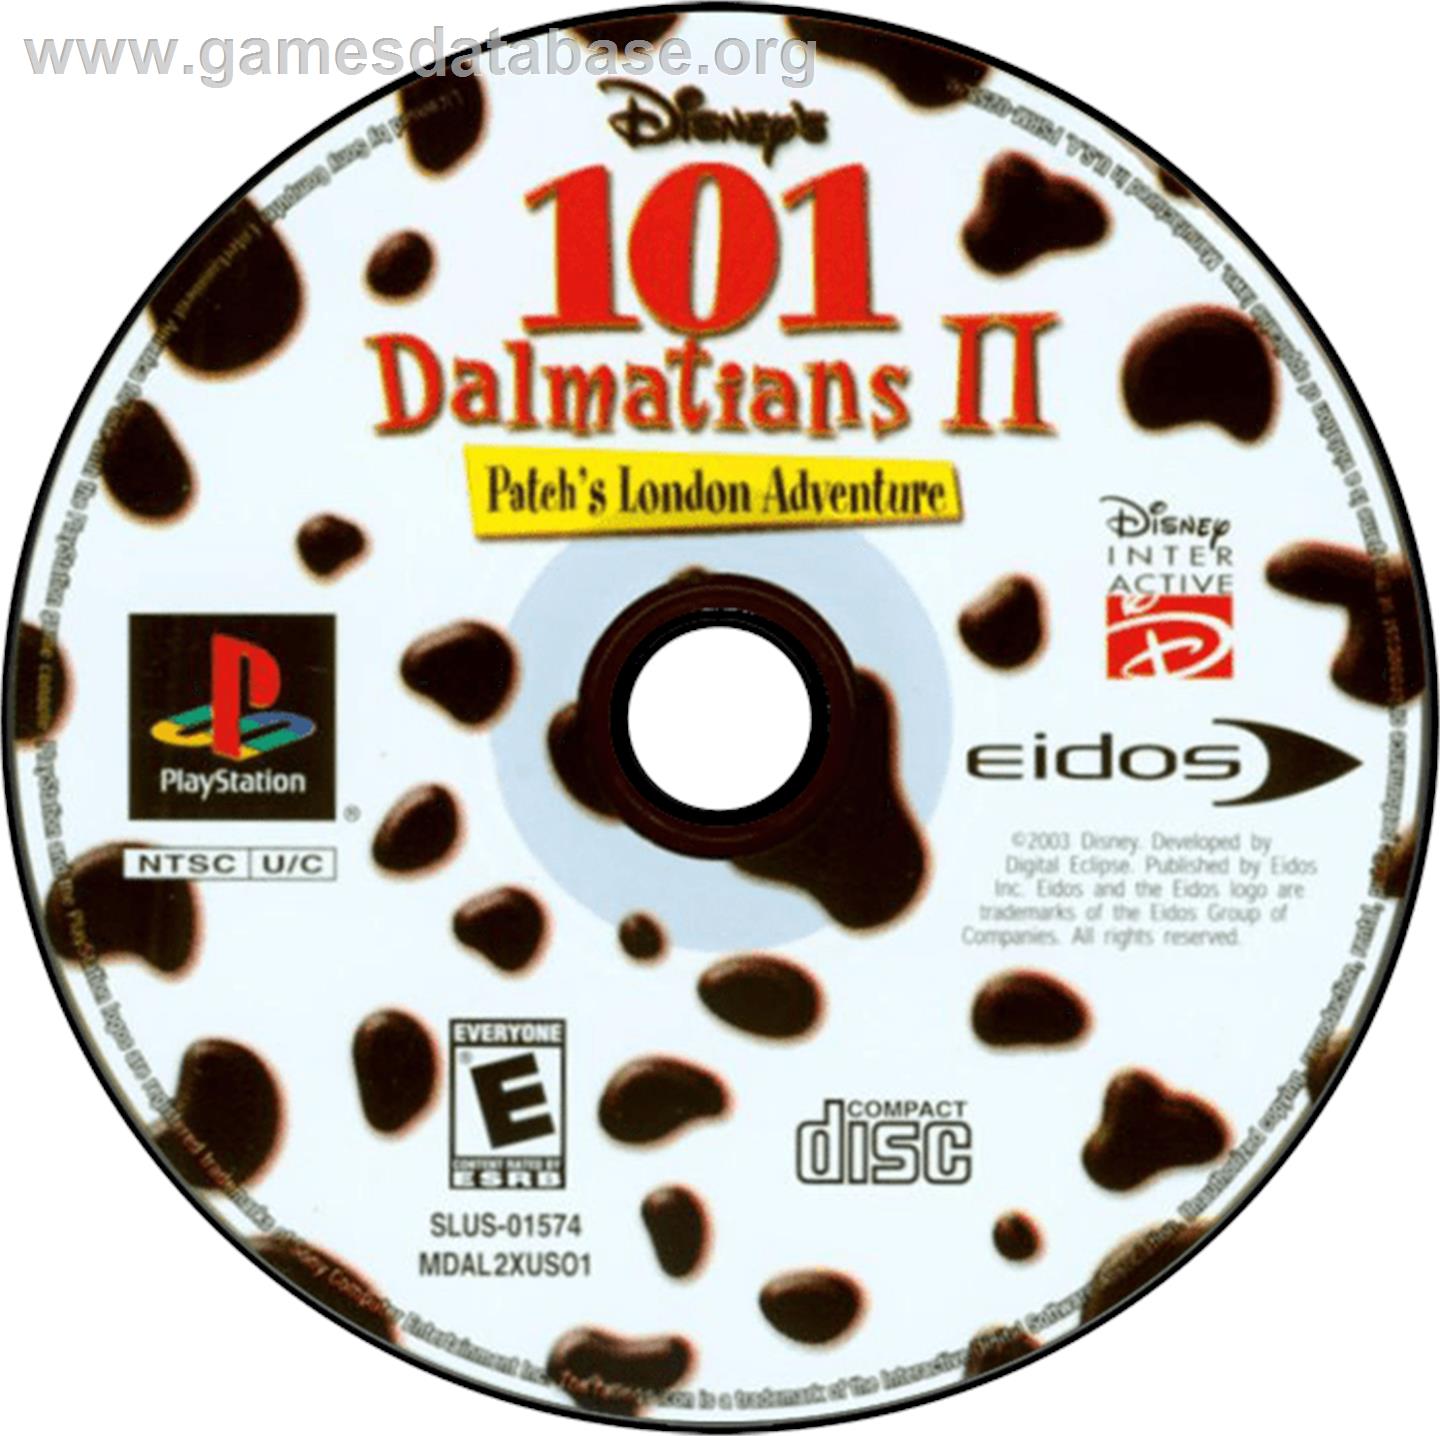 Disney's 101 Dalmatians II: Patch's London Adventure - Sony Playstation - Artwork - Disc